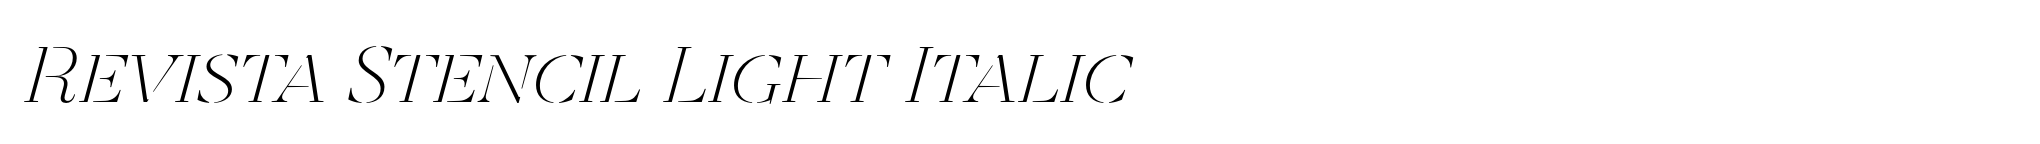 Revista Stencil Light Italic image